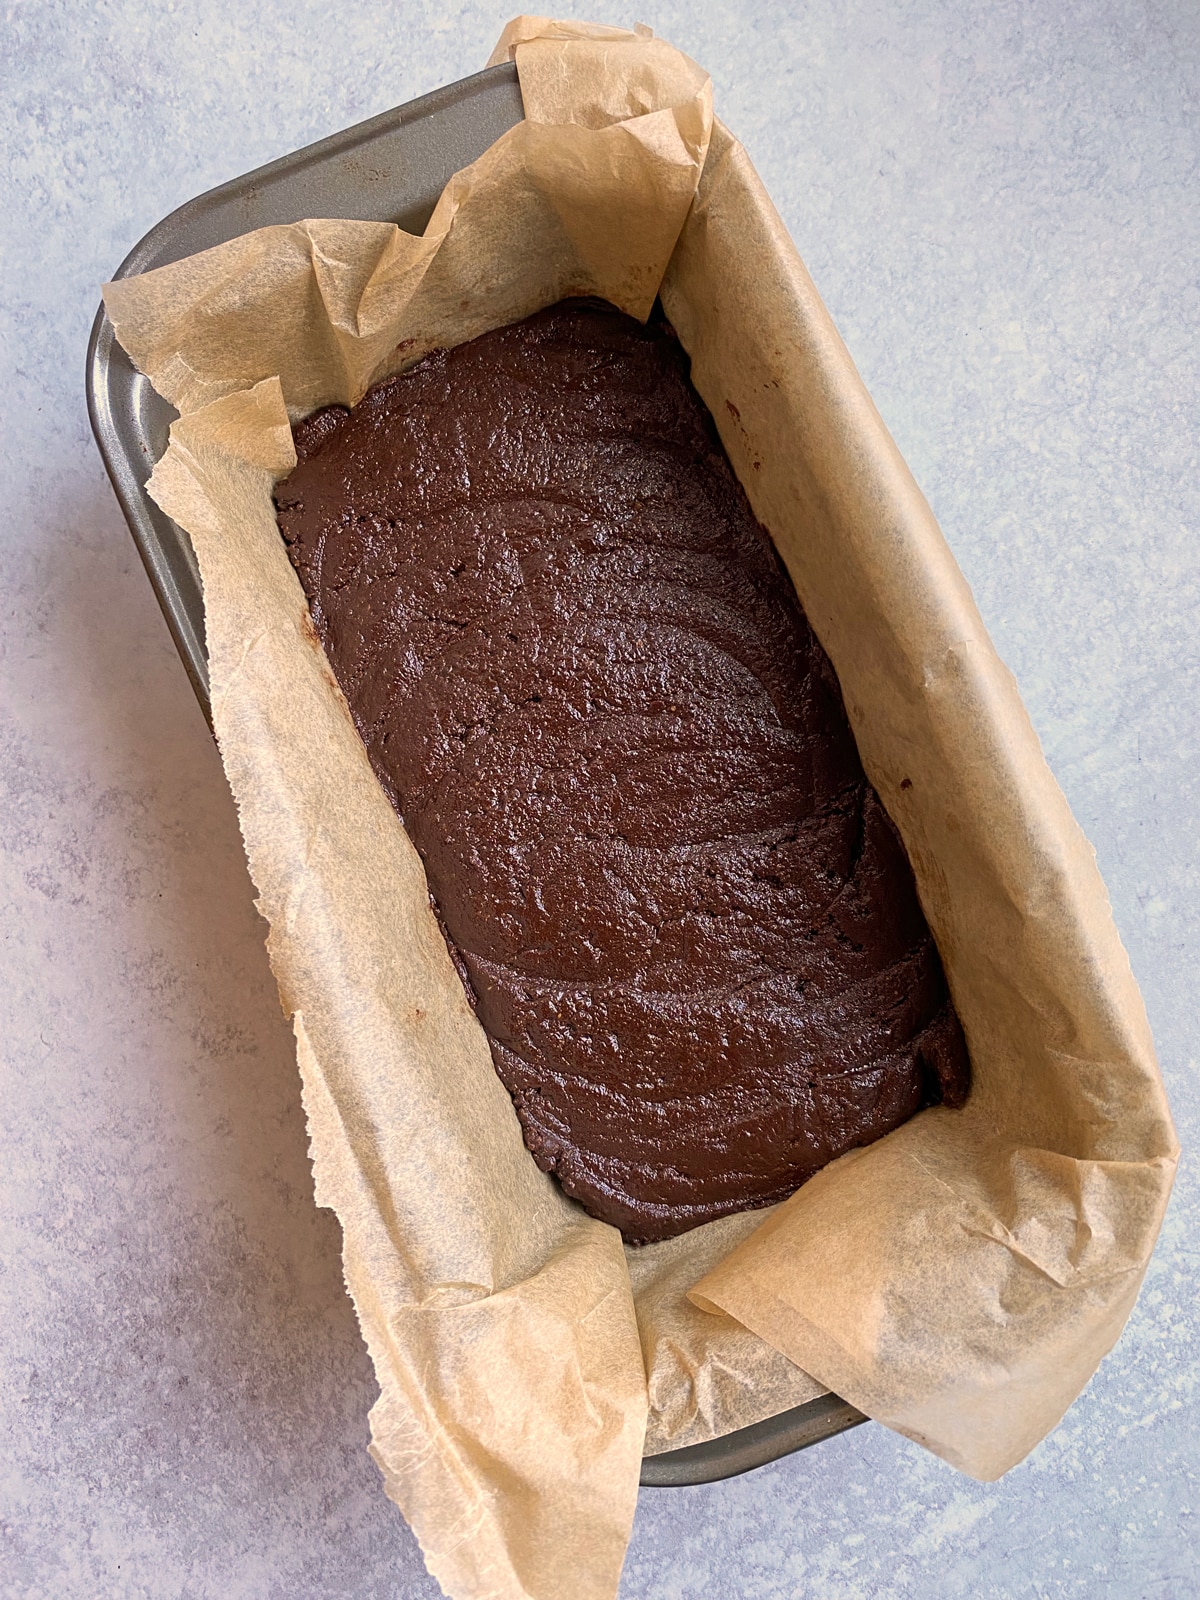 hemp protein brownie batter in lined loaf pan